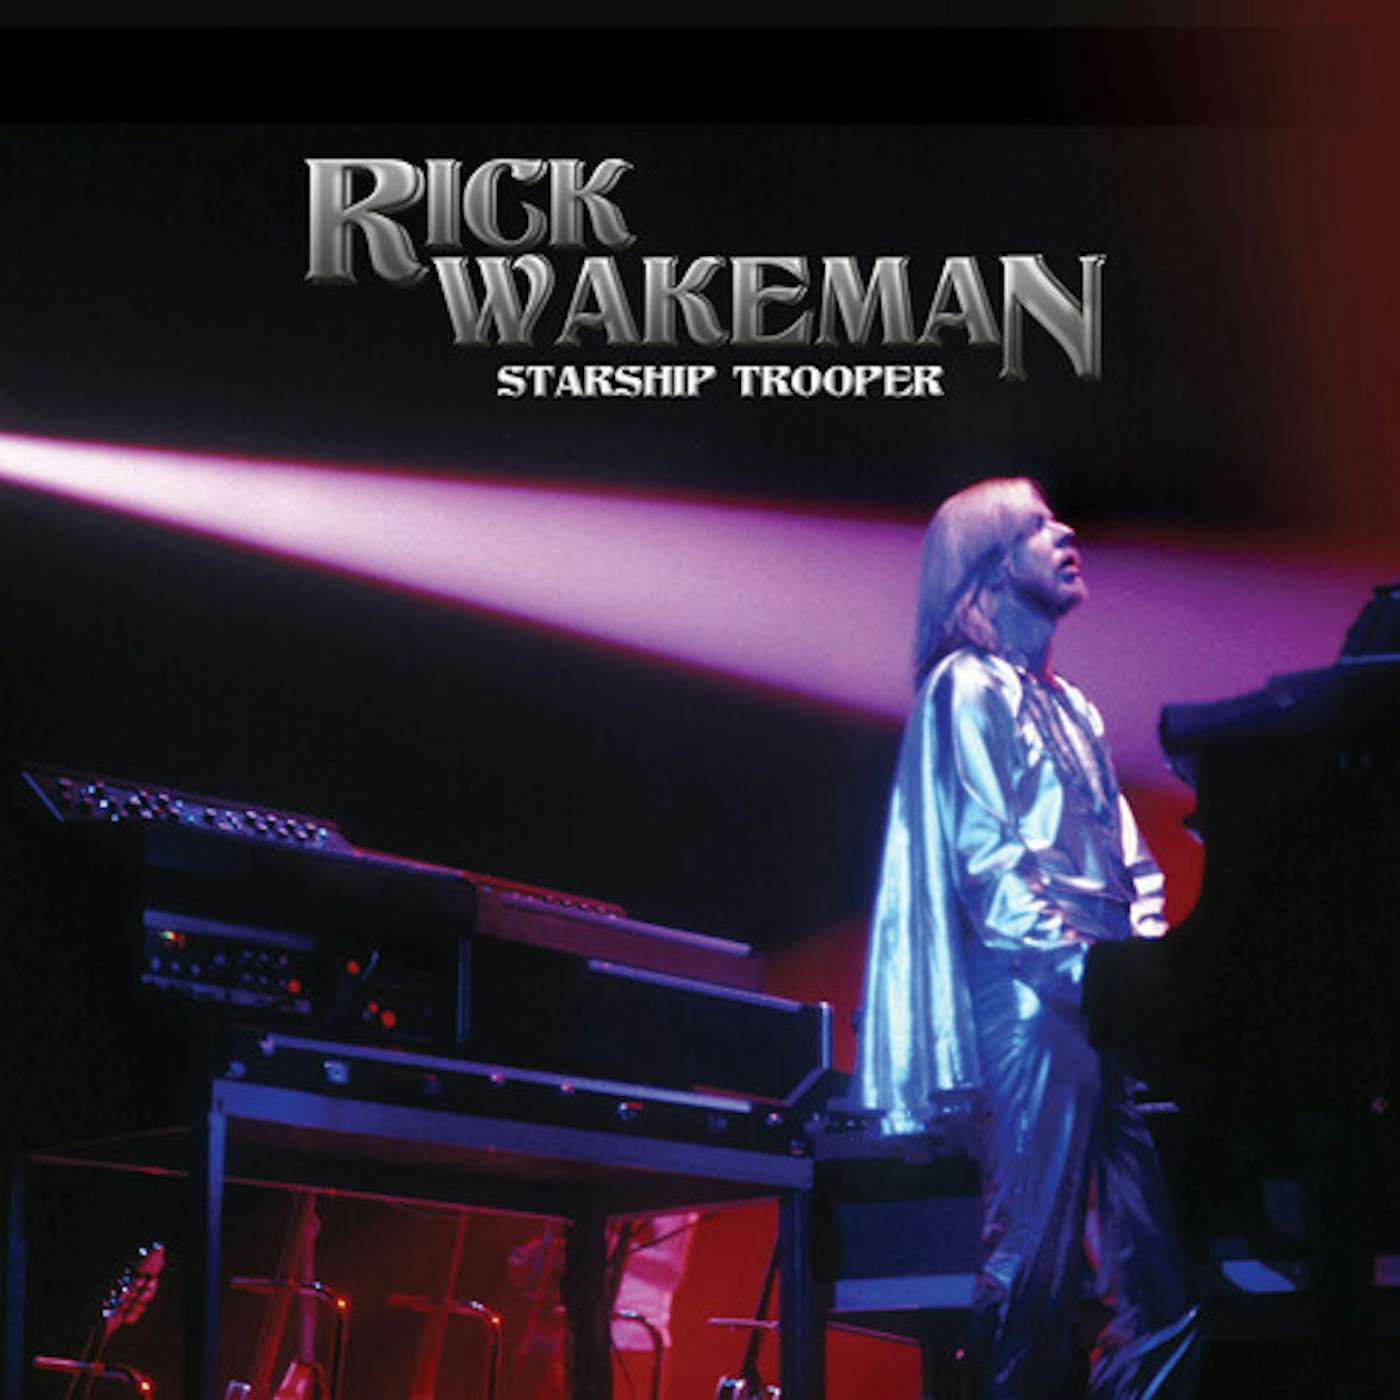 Rick Wakeman Starship Trooper Vinyl Record